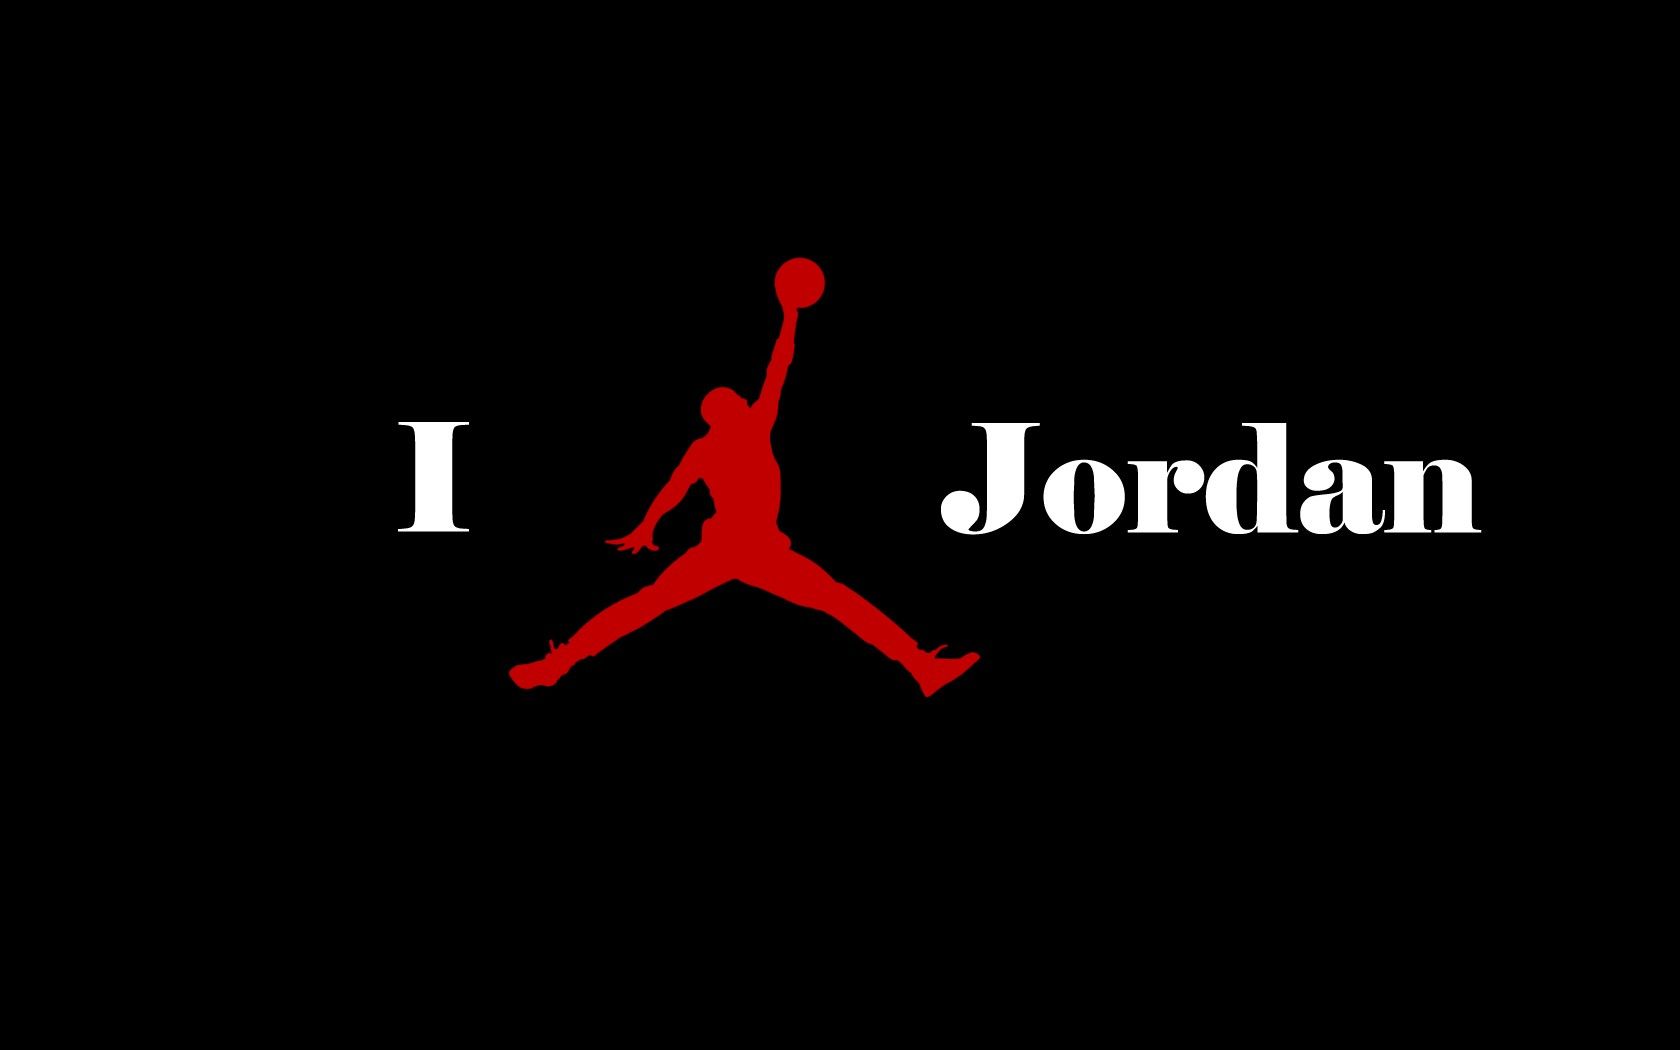 michael jordan, sports, jordan logo, basketball